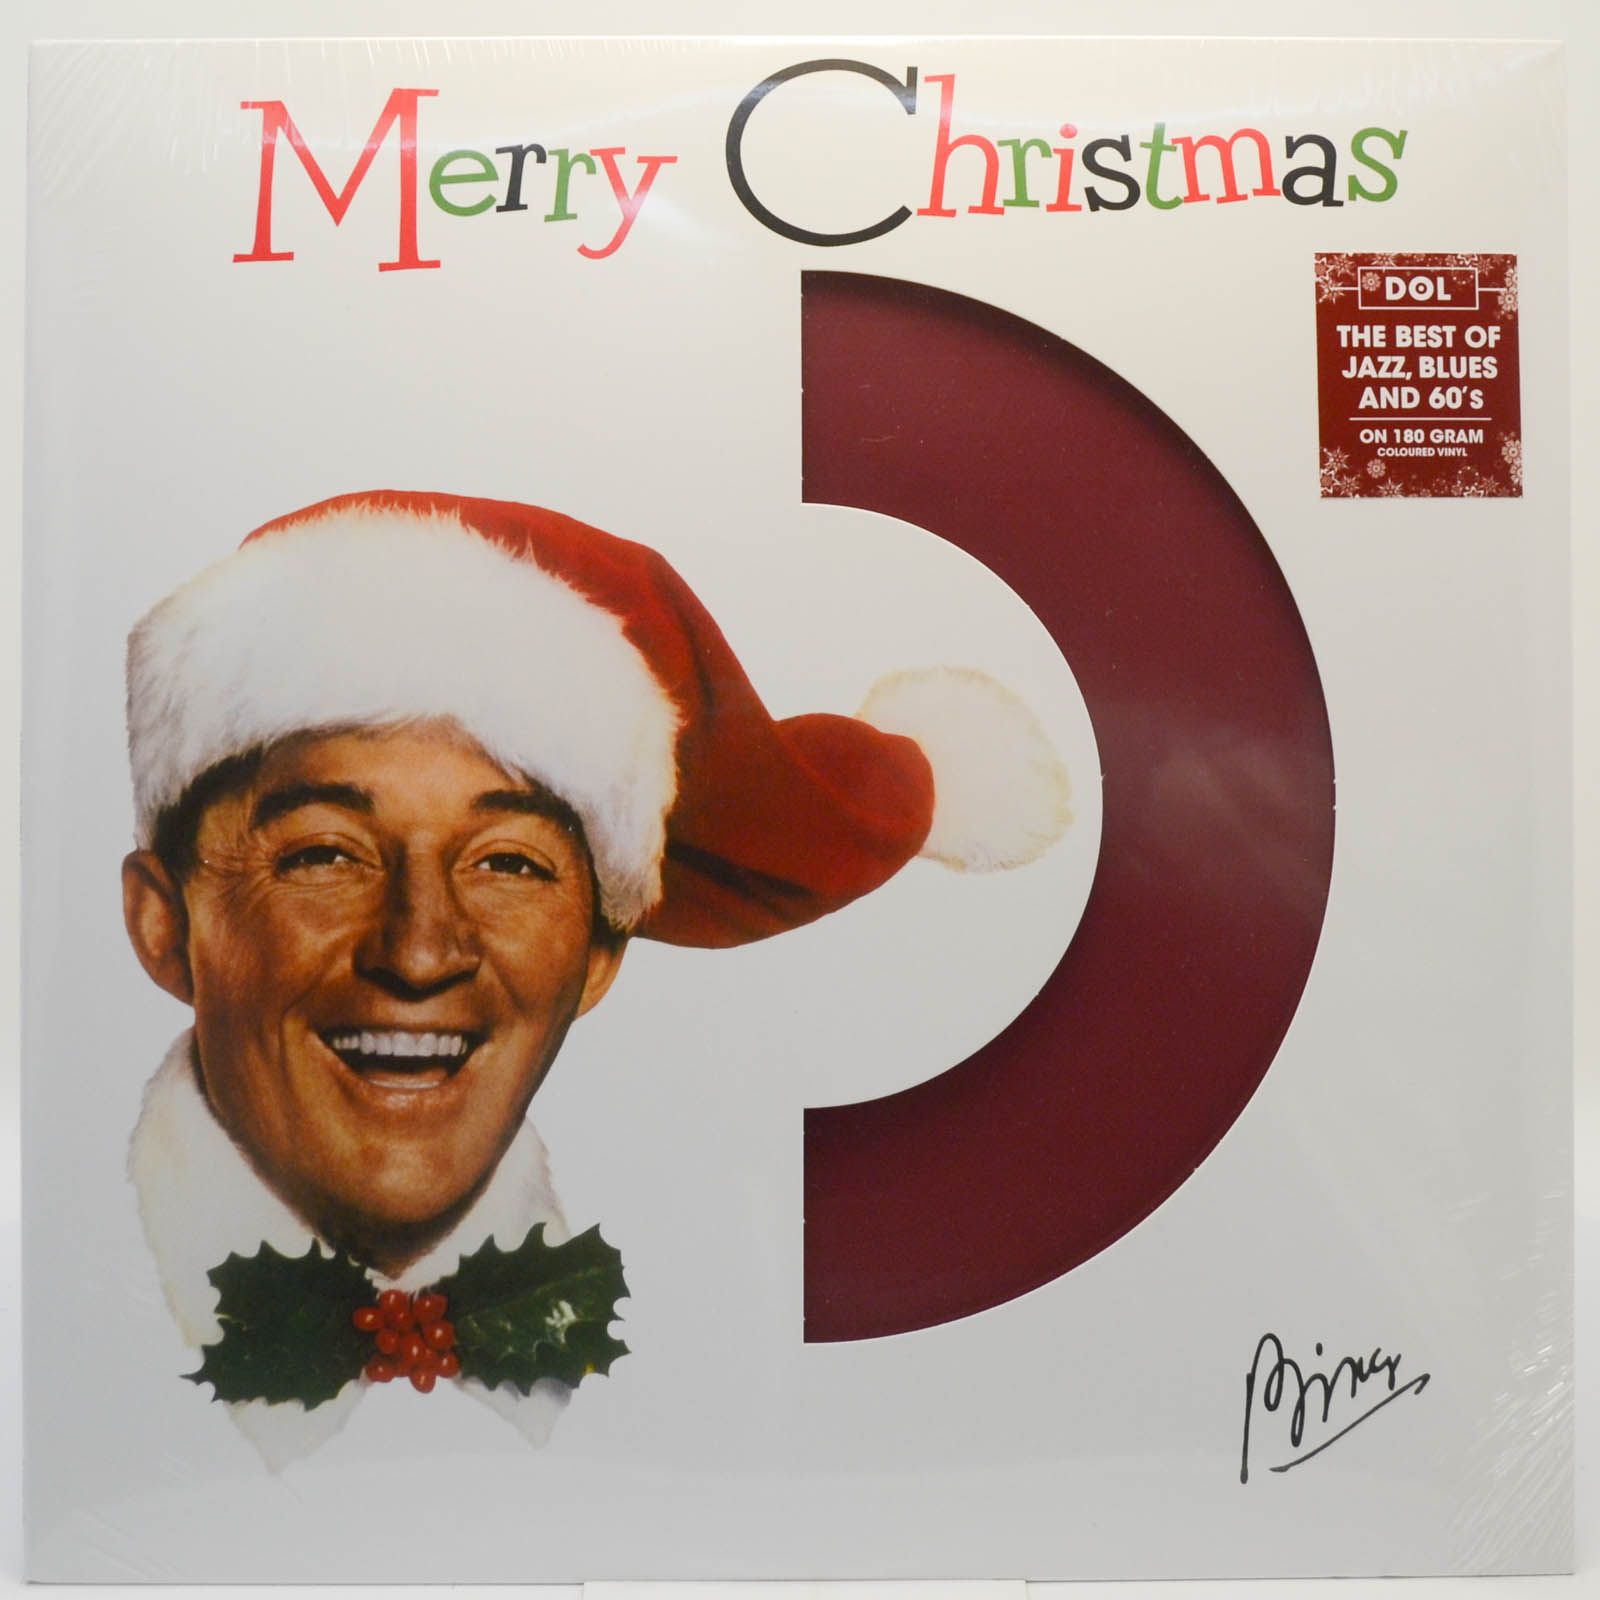 Bing Crosby — Merry Christmas, 1955